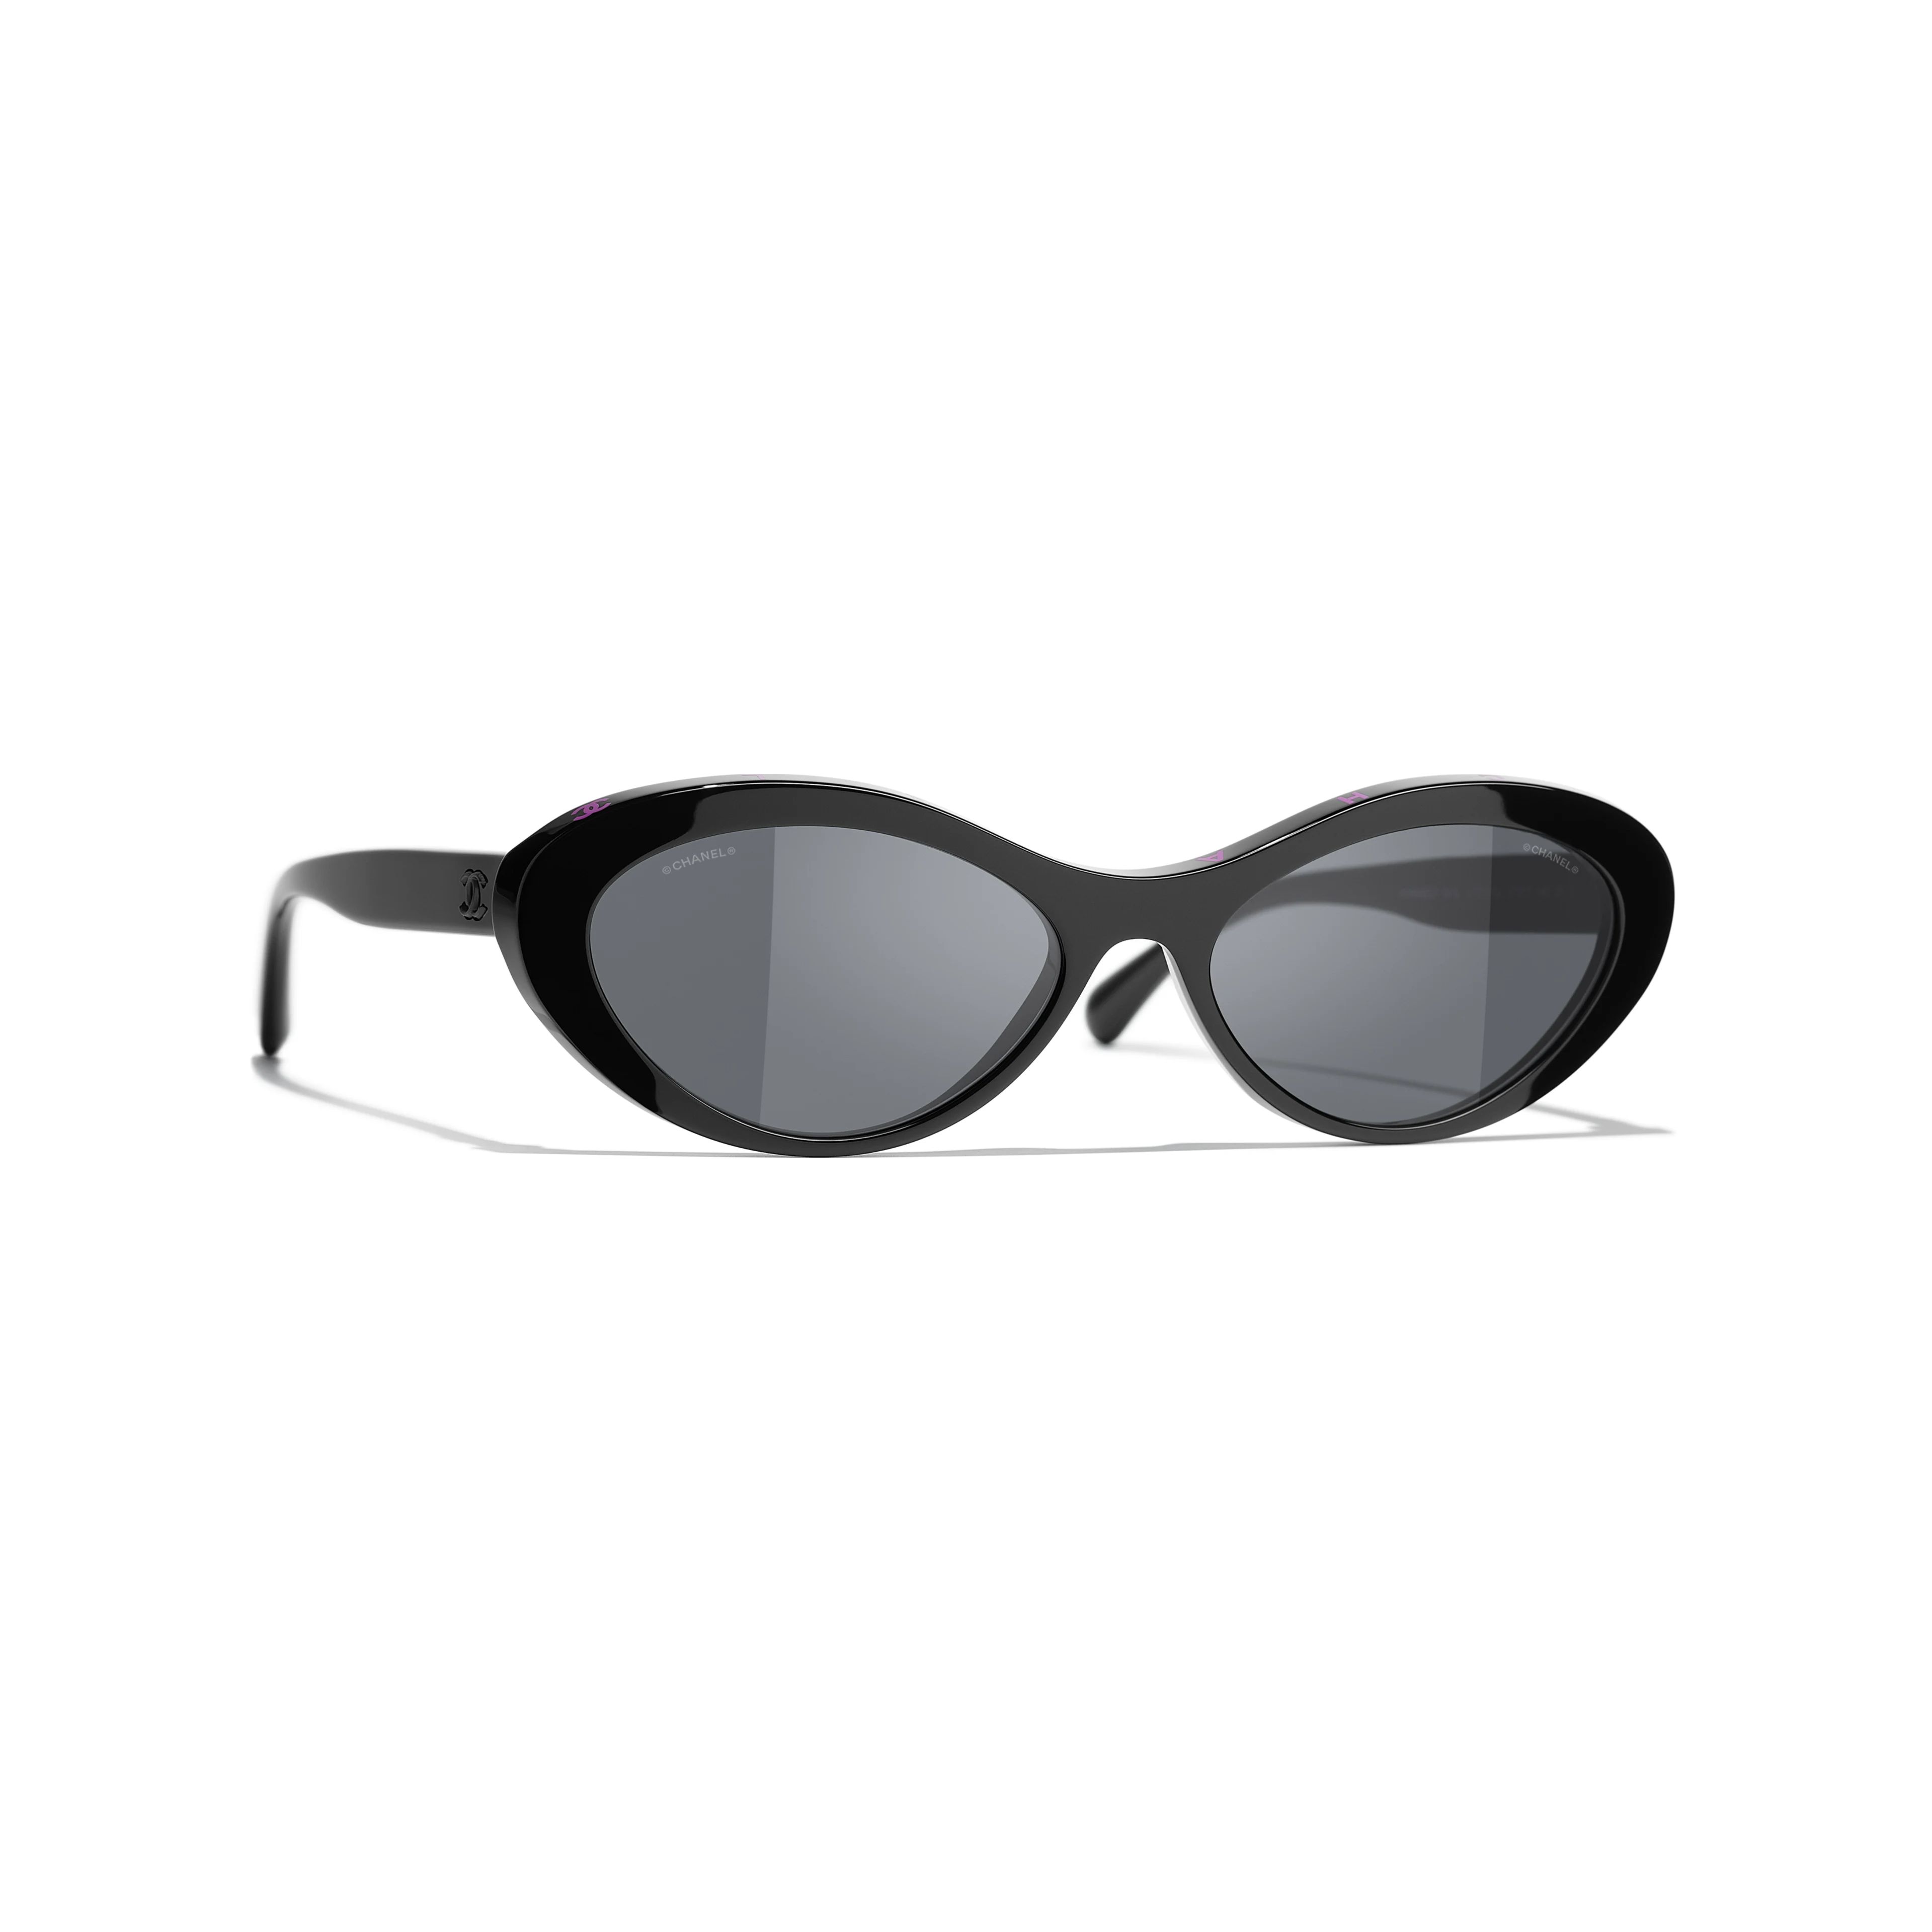 Sunglasses: Oval Sunglasses, acetate — Fashion | CHANEL | Chanel, Inc. (US)